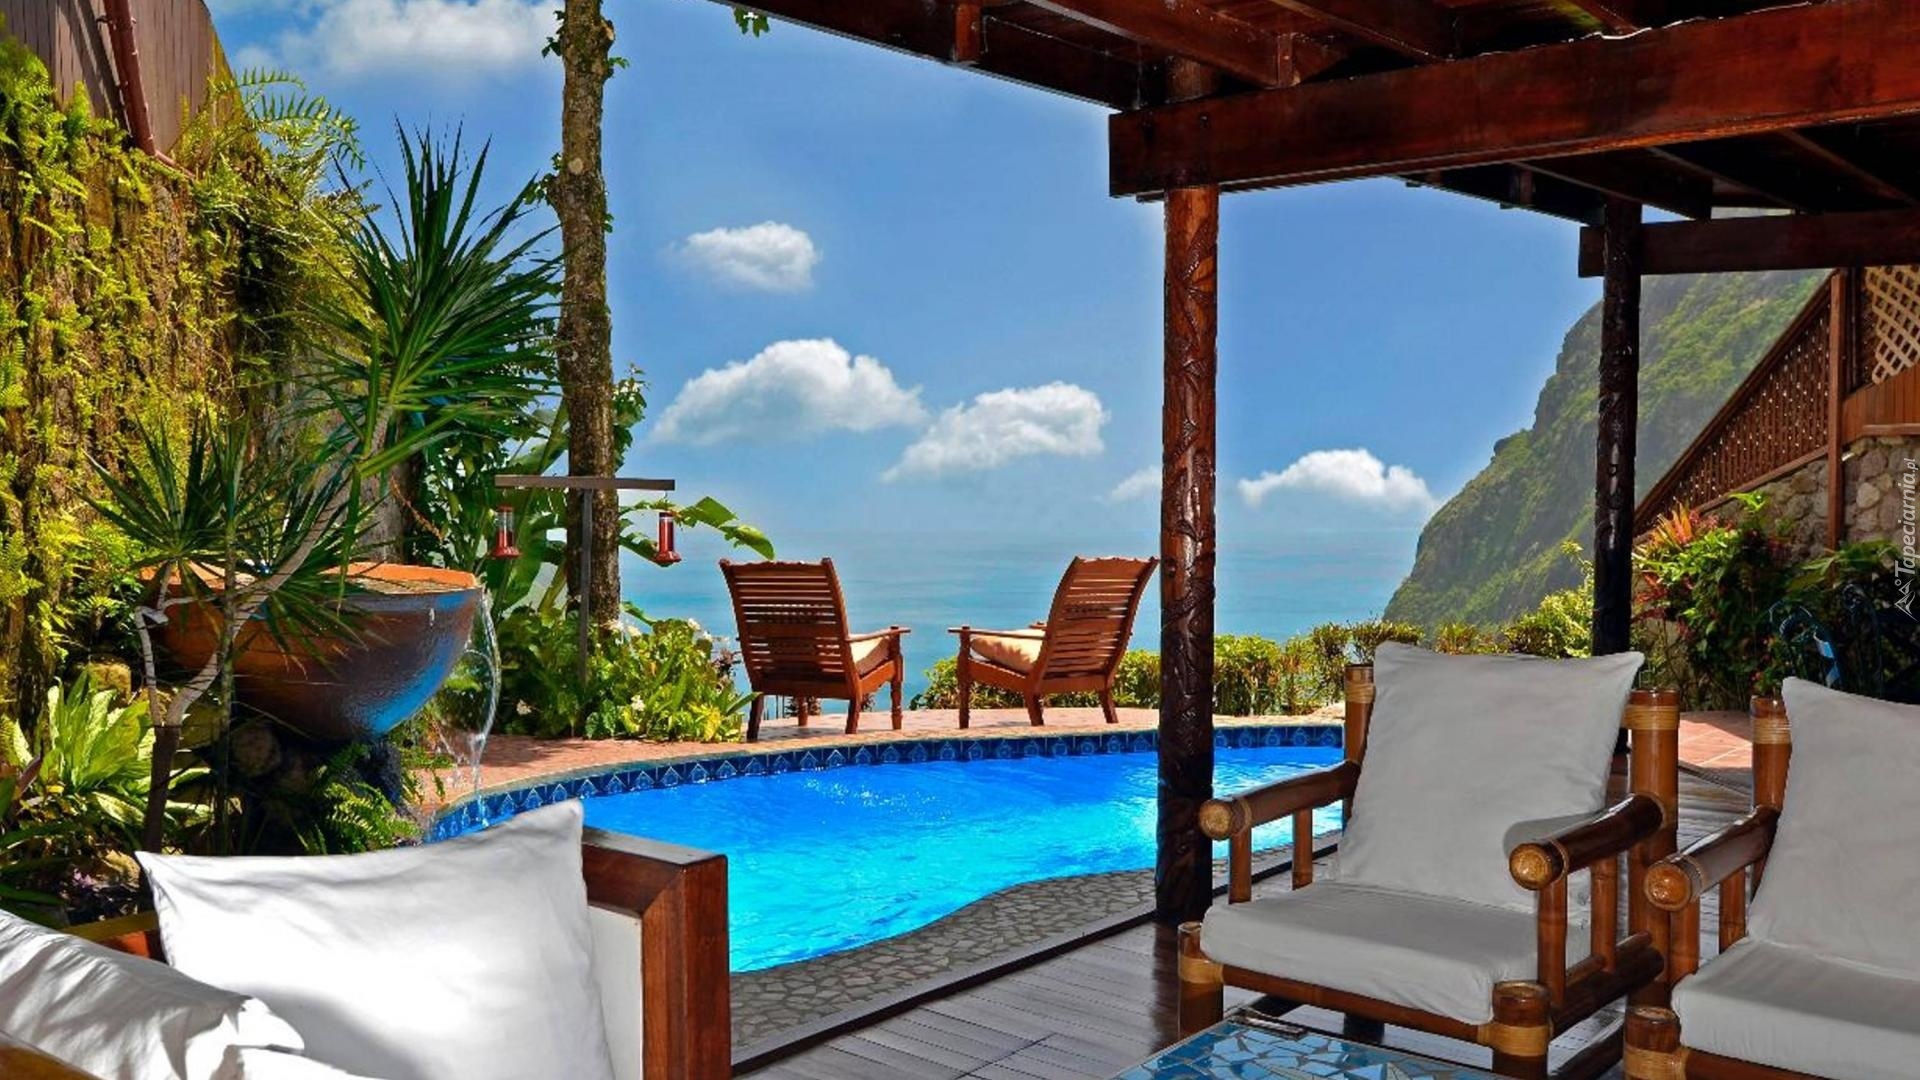 Hotel, Basen, Saint Lucia, Karaiby